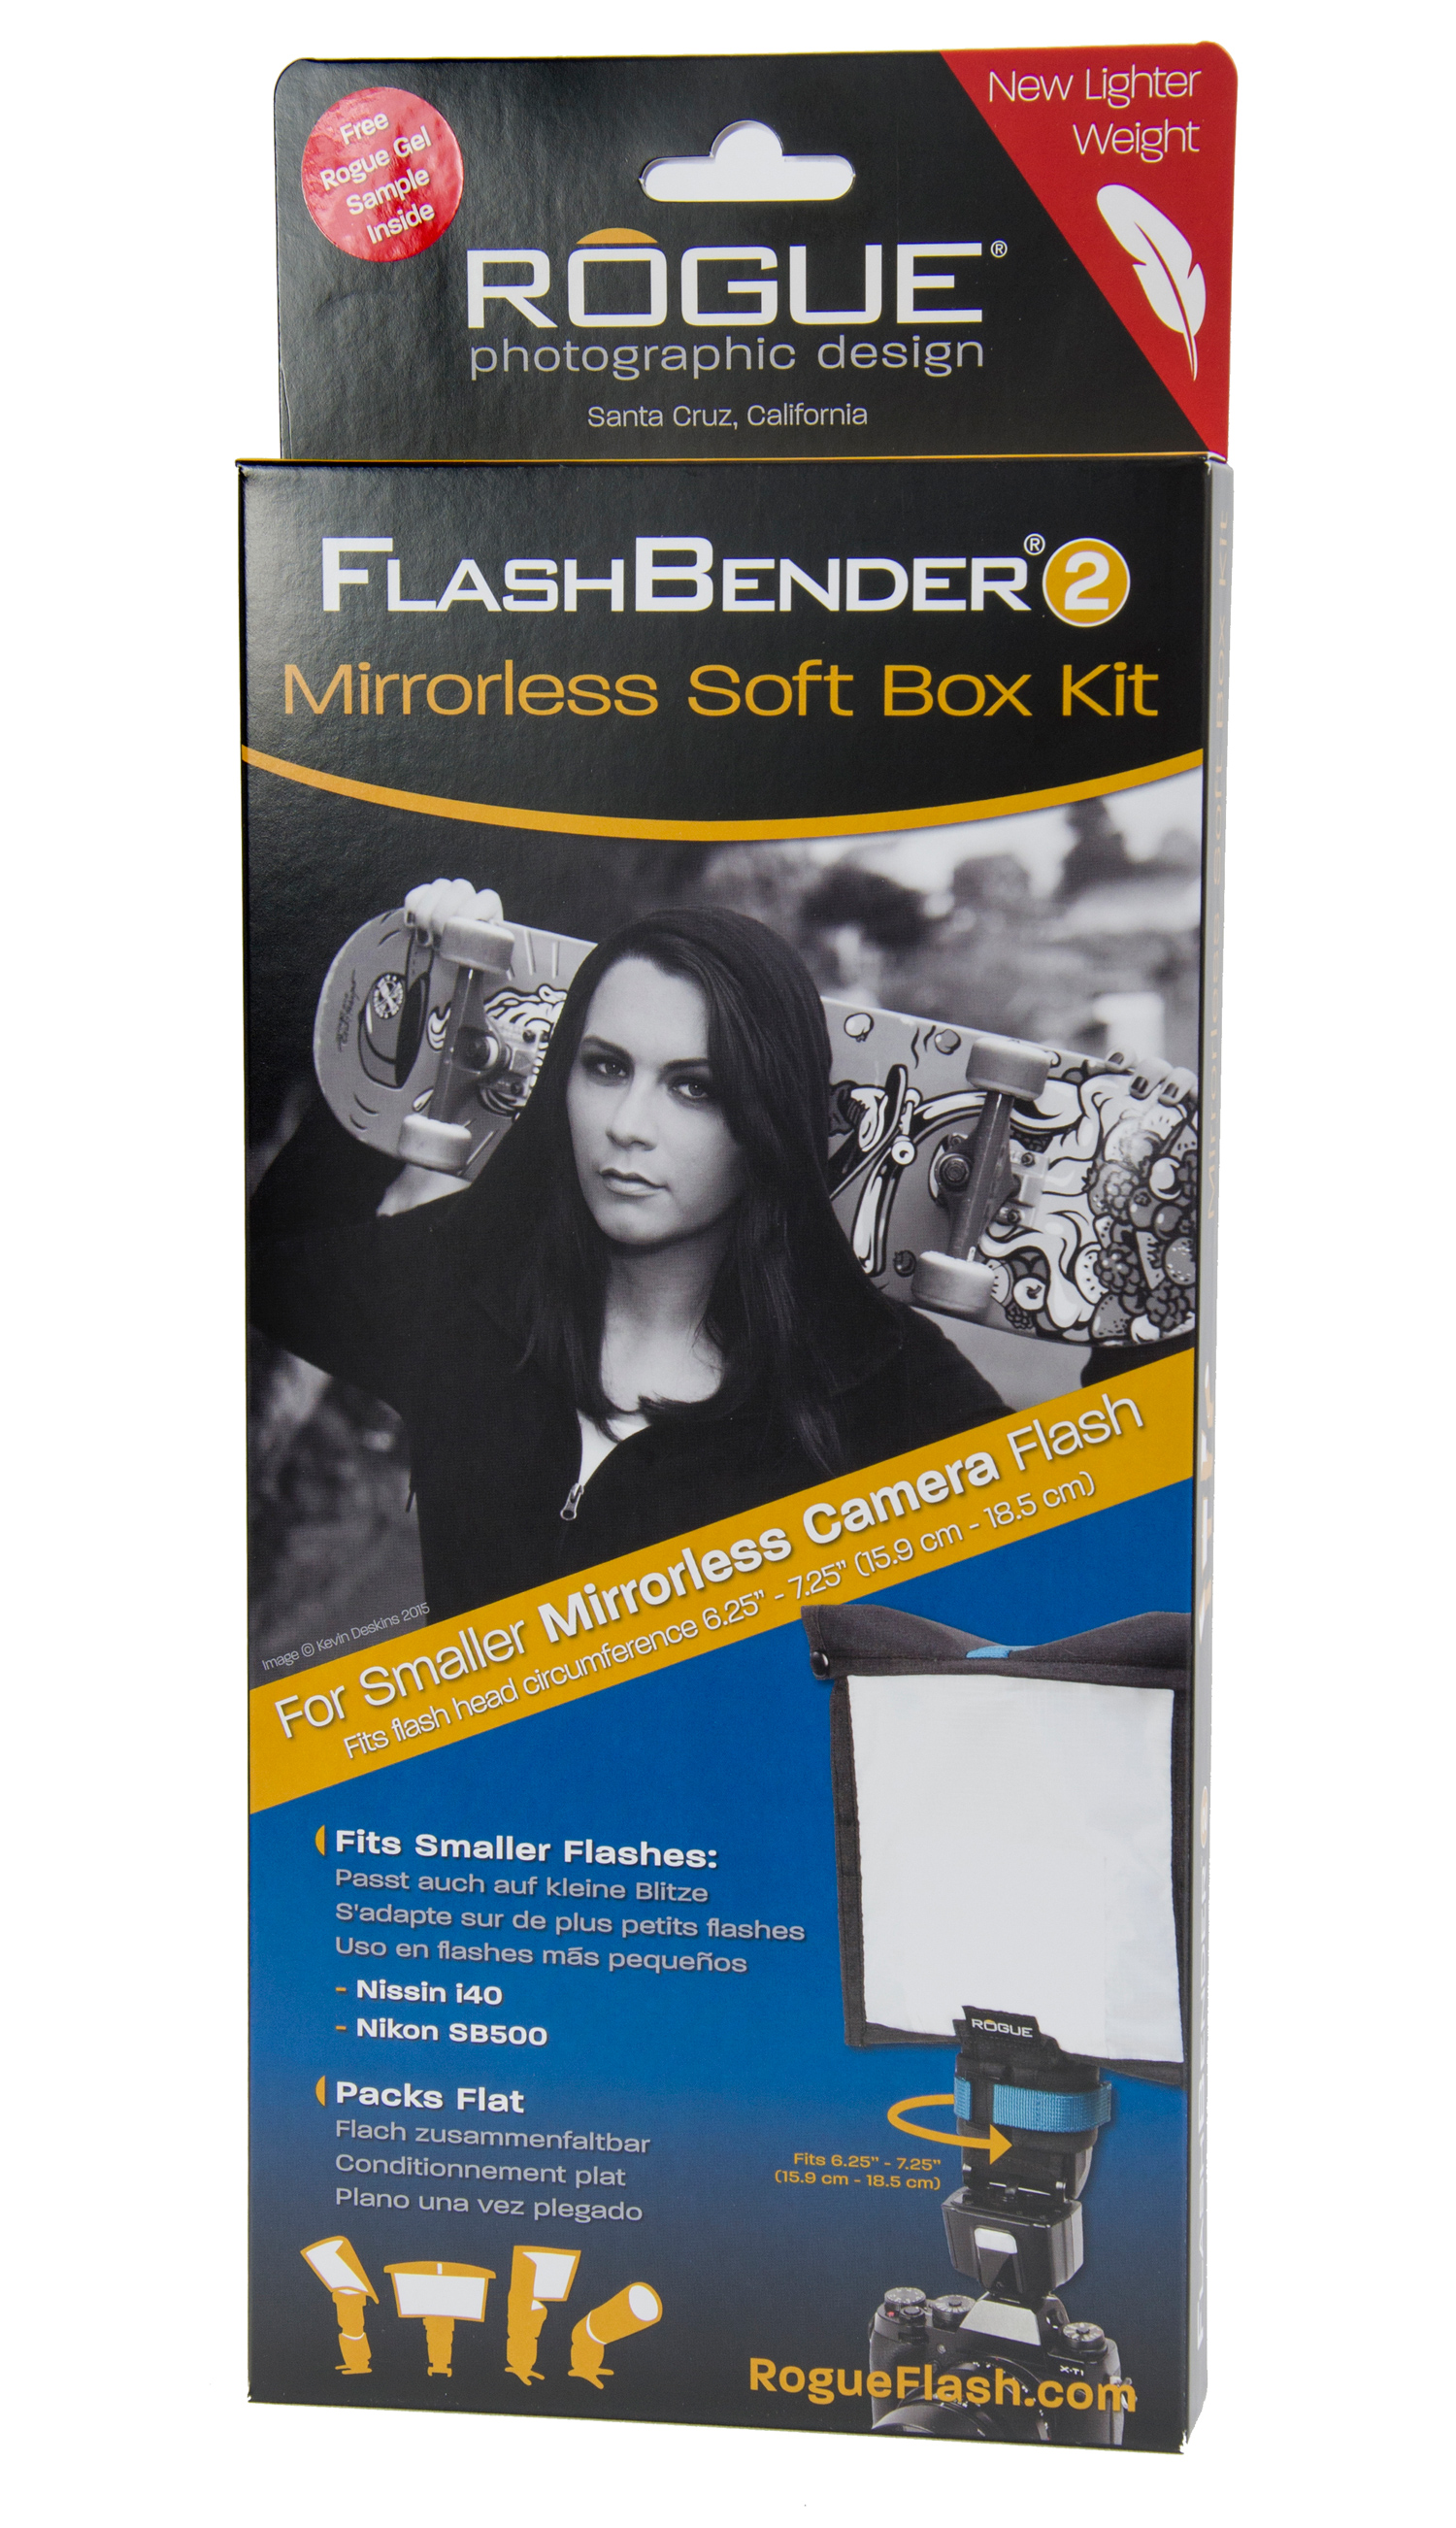 Rogue FlashBender 2 Mirrorless Soft Box Kit